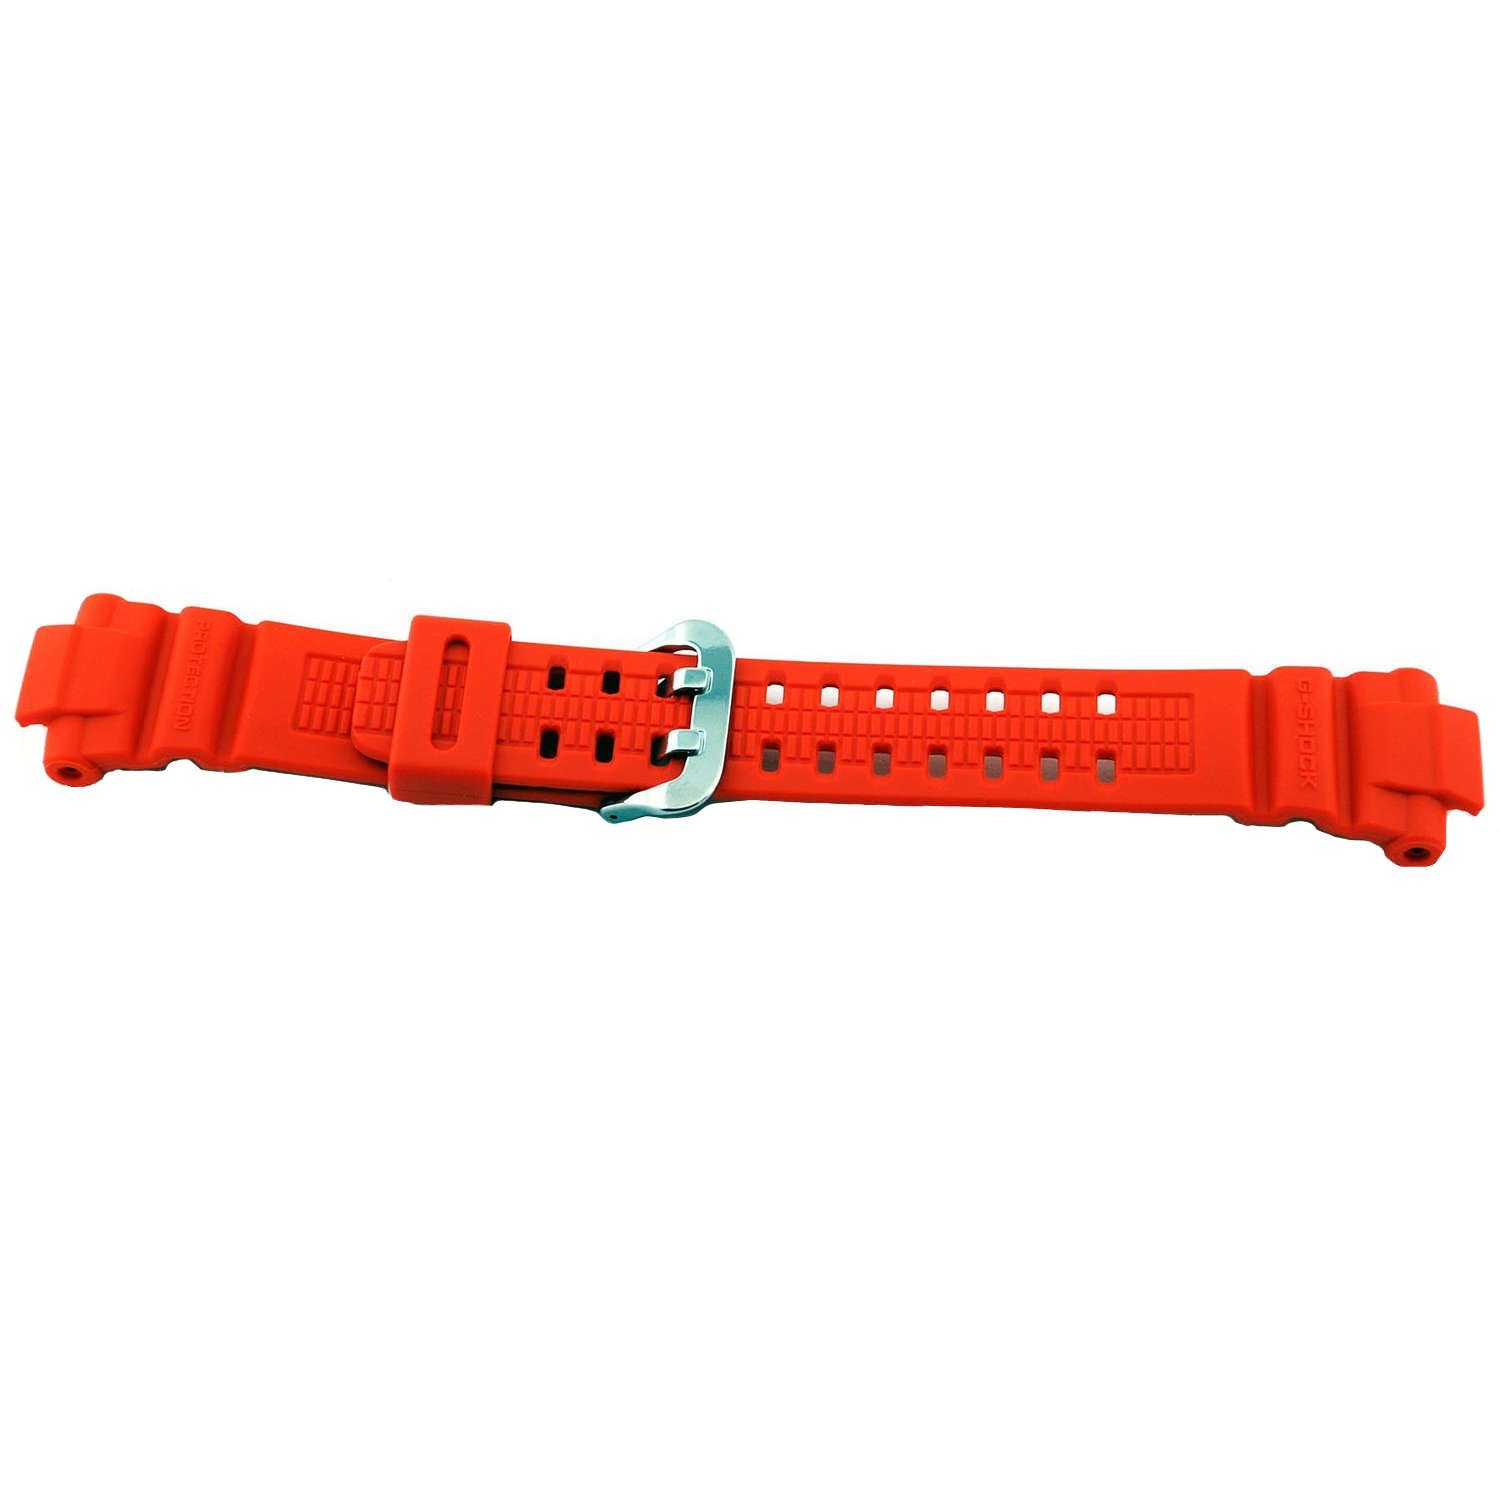 Casio #10370830 Genuine Factory Replacement Band for G Shock Watch Model GW3000M-4AV (Orange)